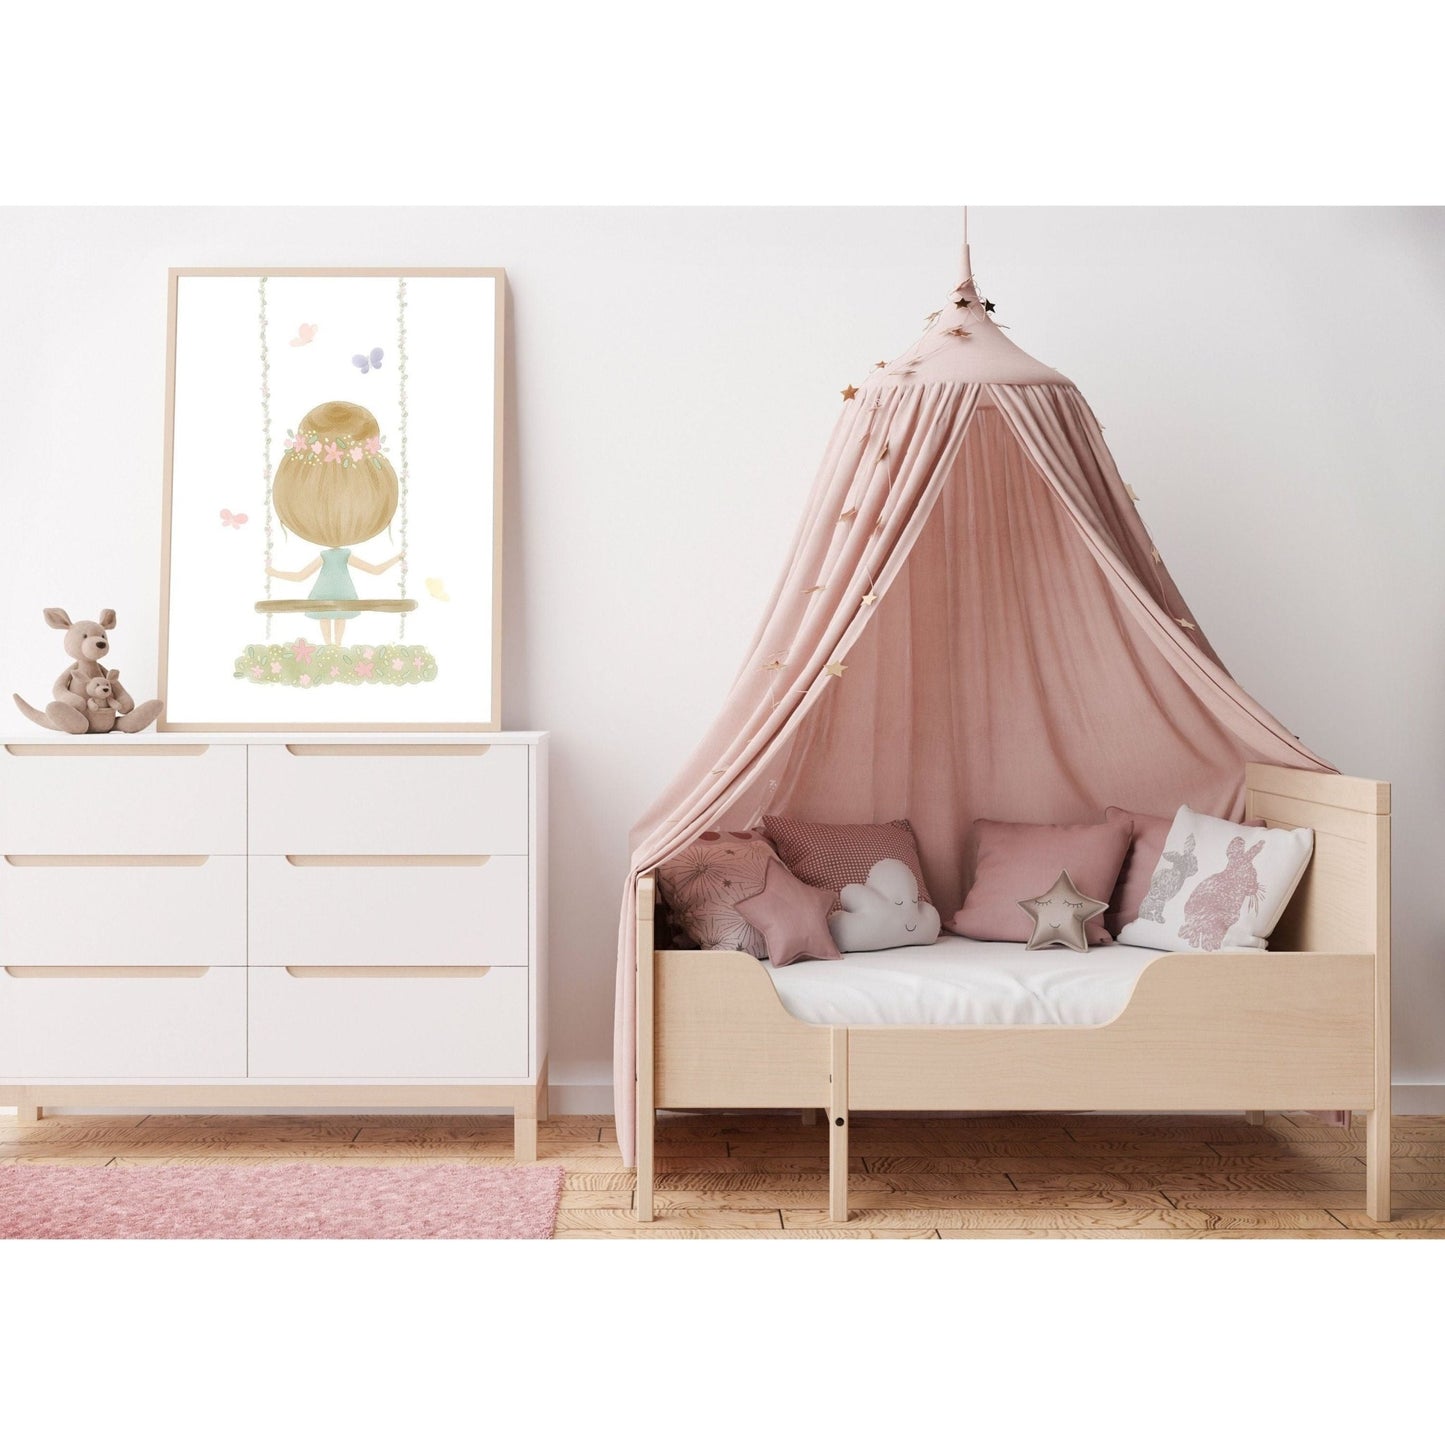 Girls Room Print - Nursery Decor - Cheerful Lane